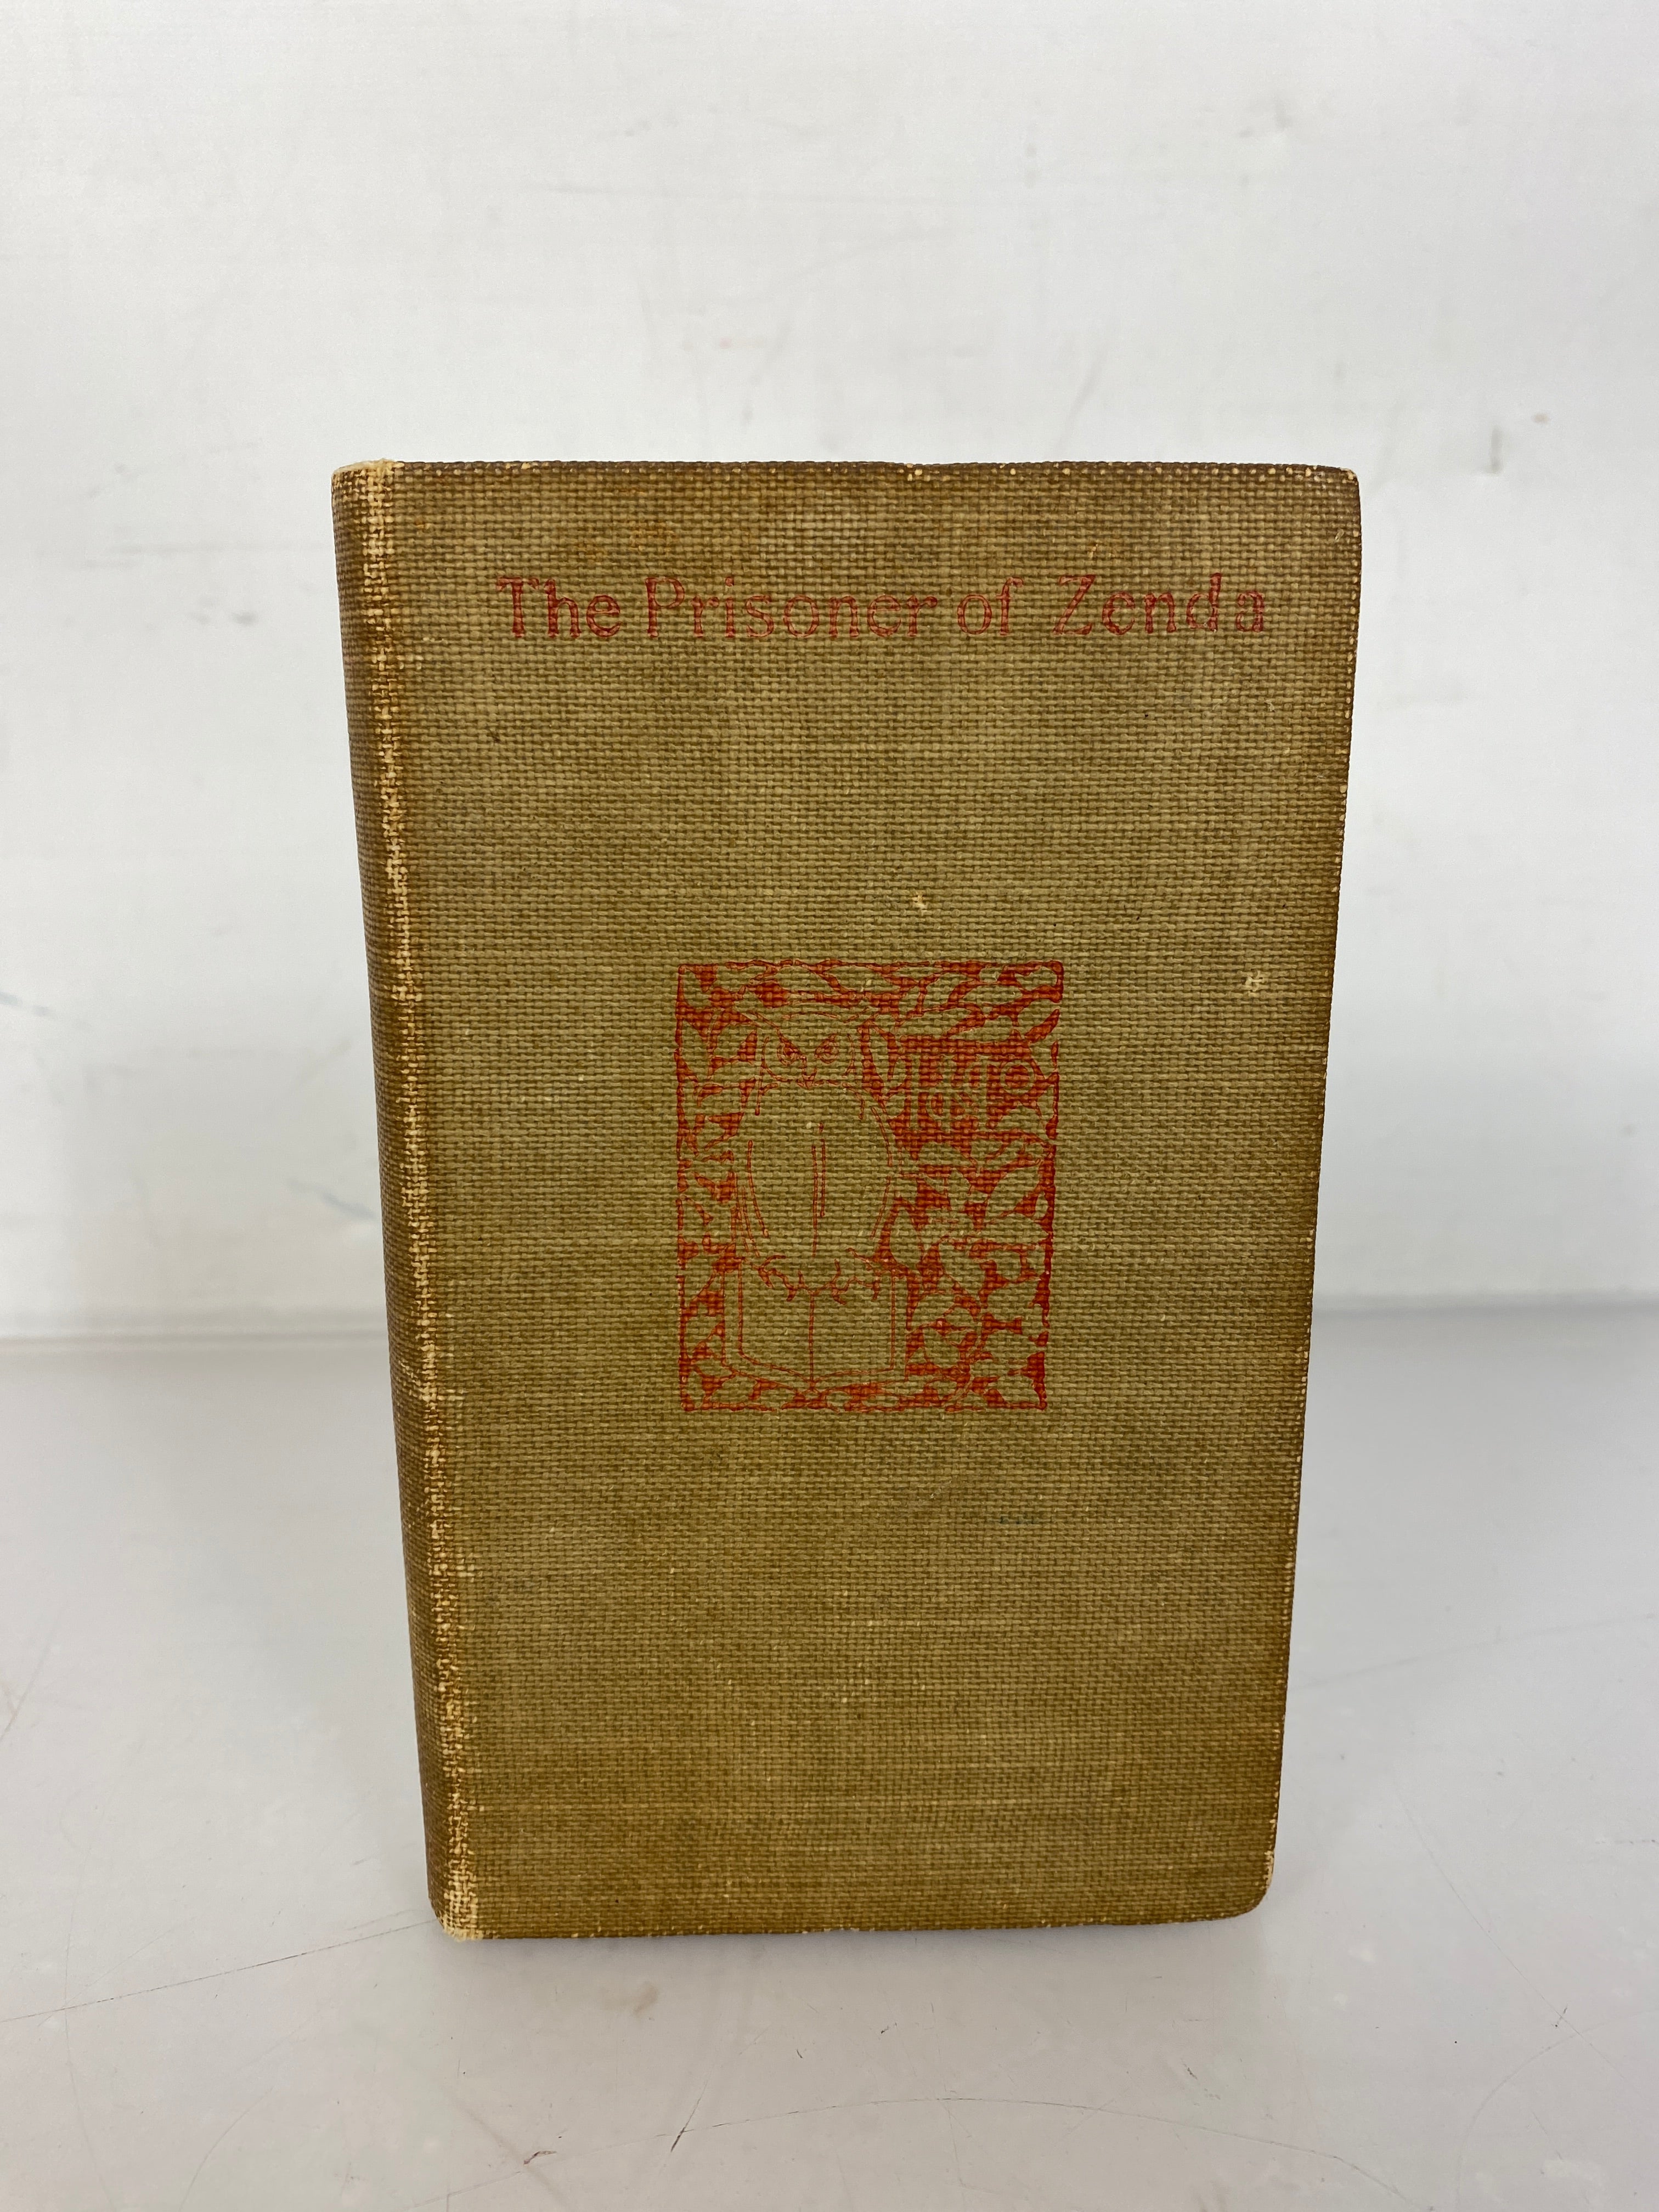 The Prisoner of Zenda by Anthony Hope (Sir Anthony Hope Hawkins) 1896 HC